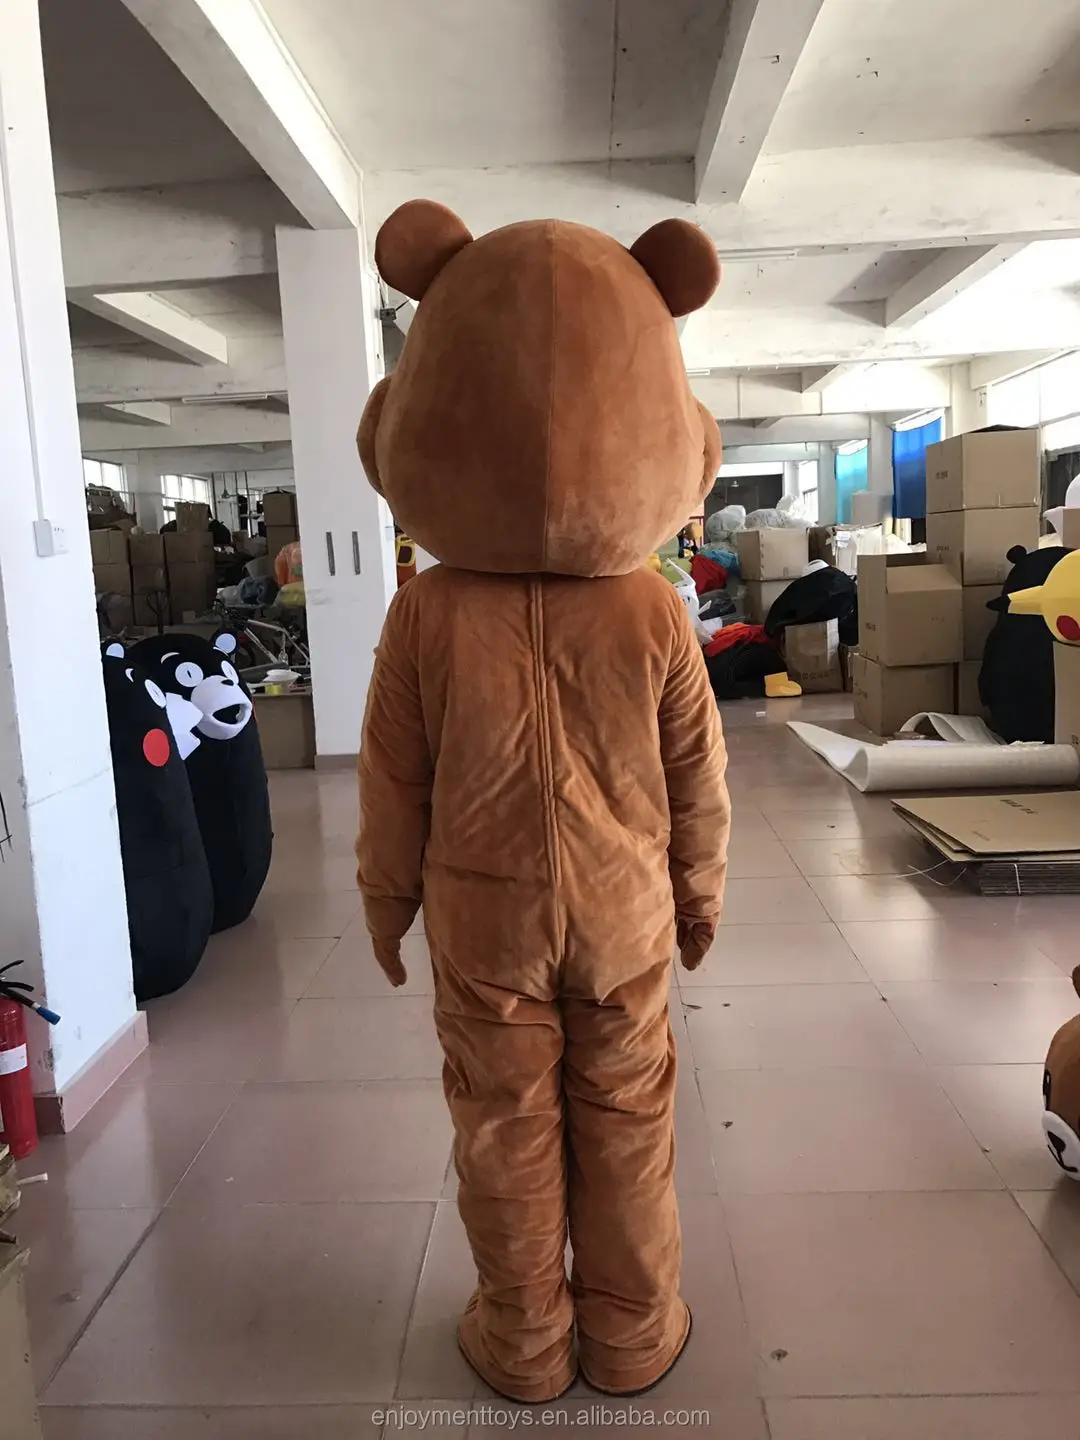 Used Teddy Bear Used Mascot Costume For Sale - Buy Teddy Bear Mascot ...